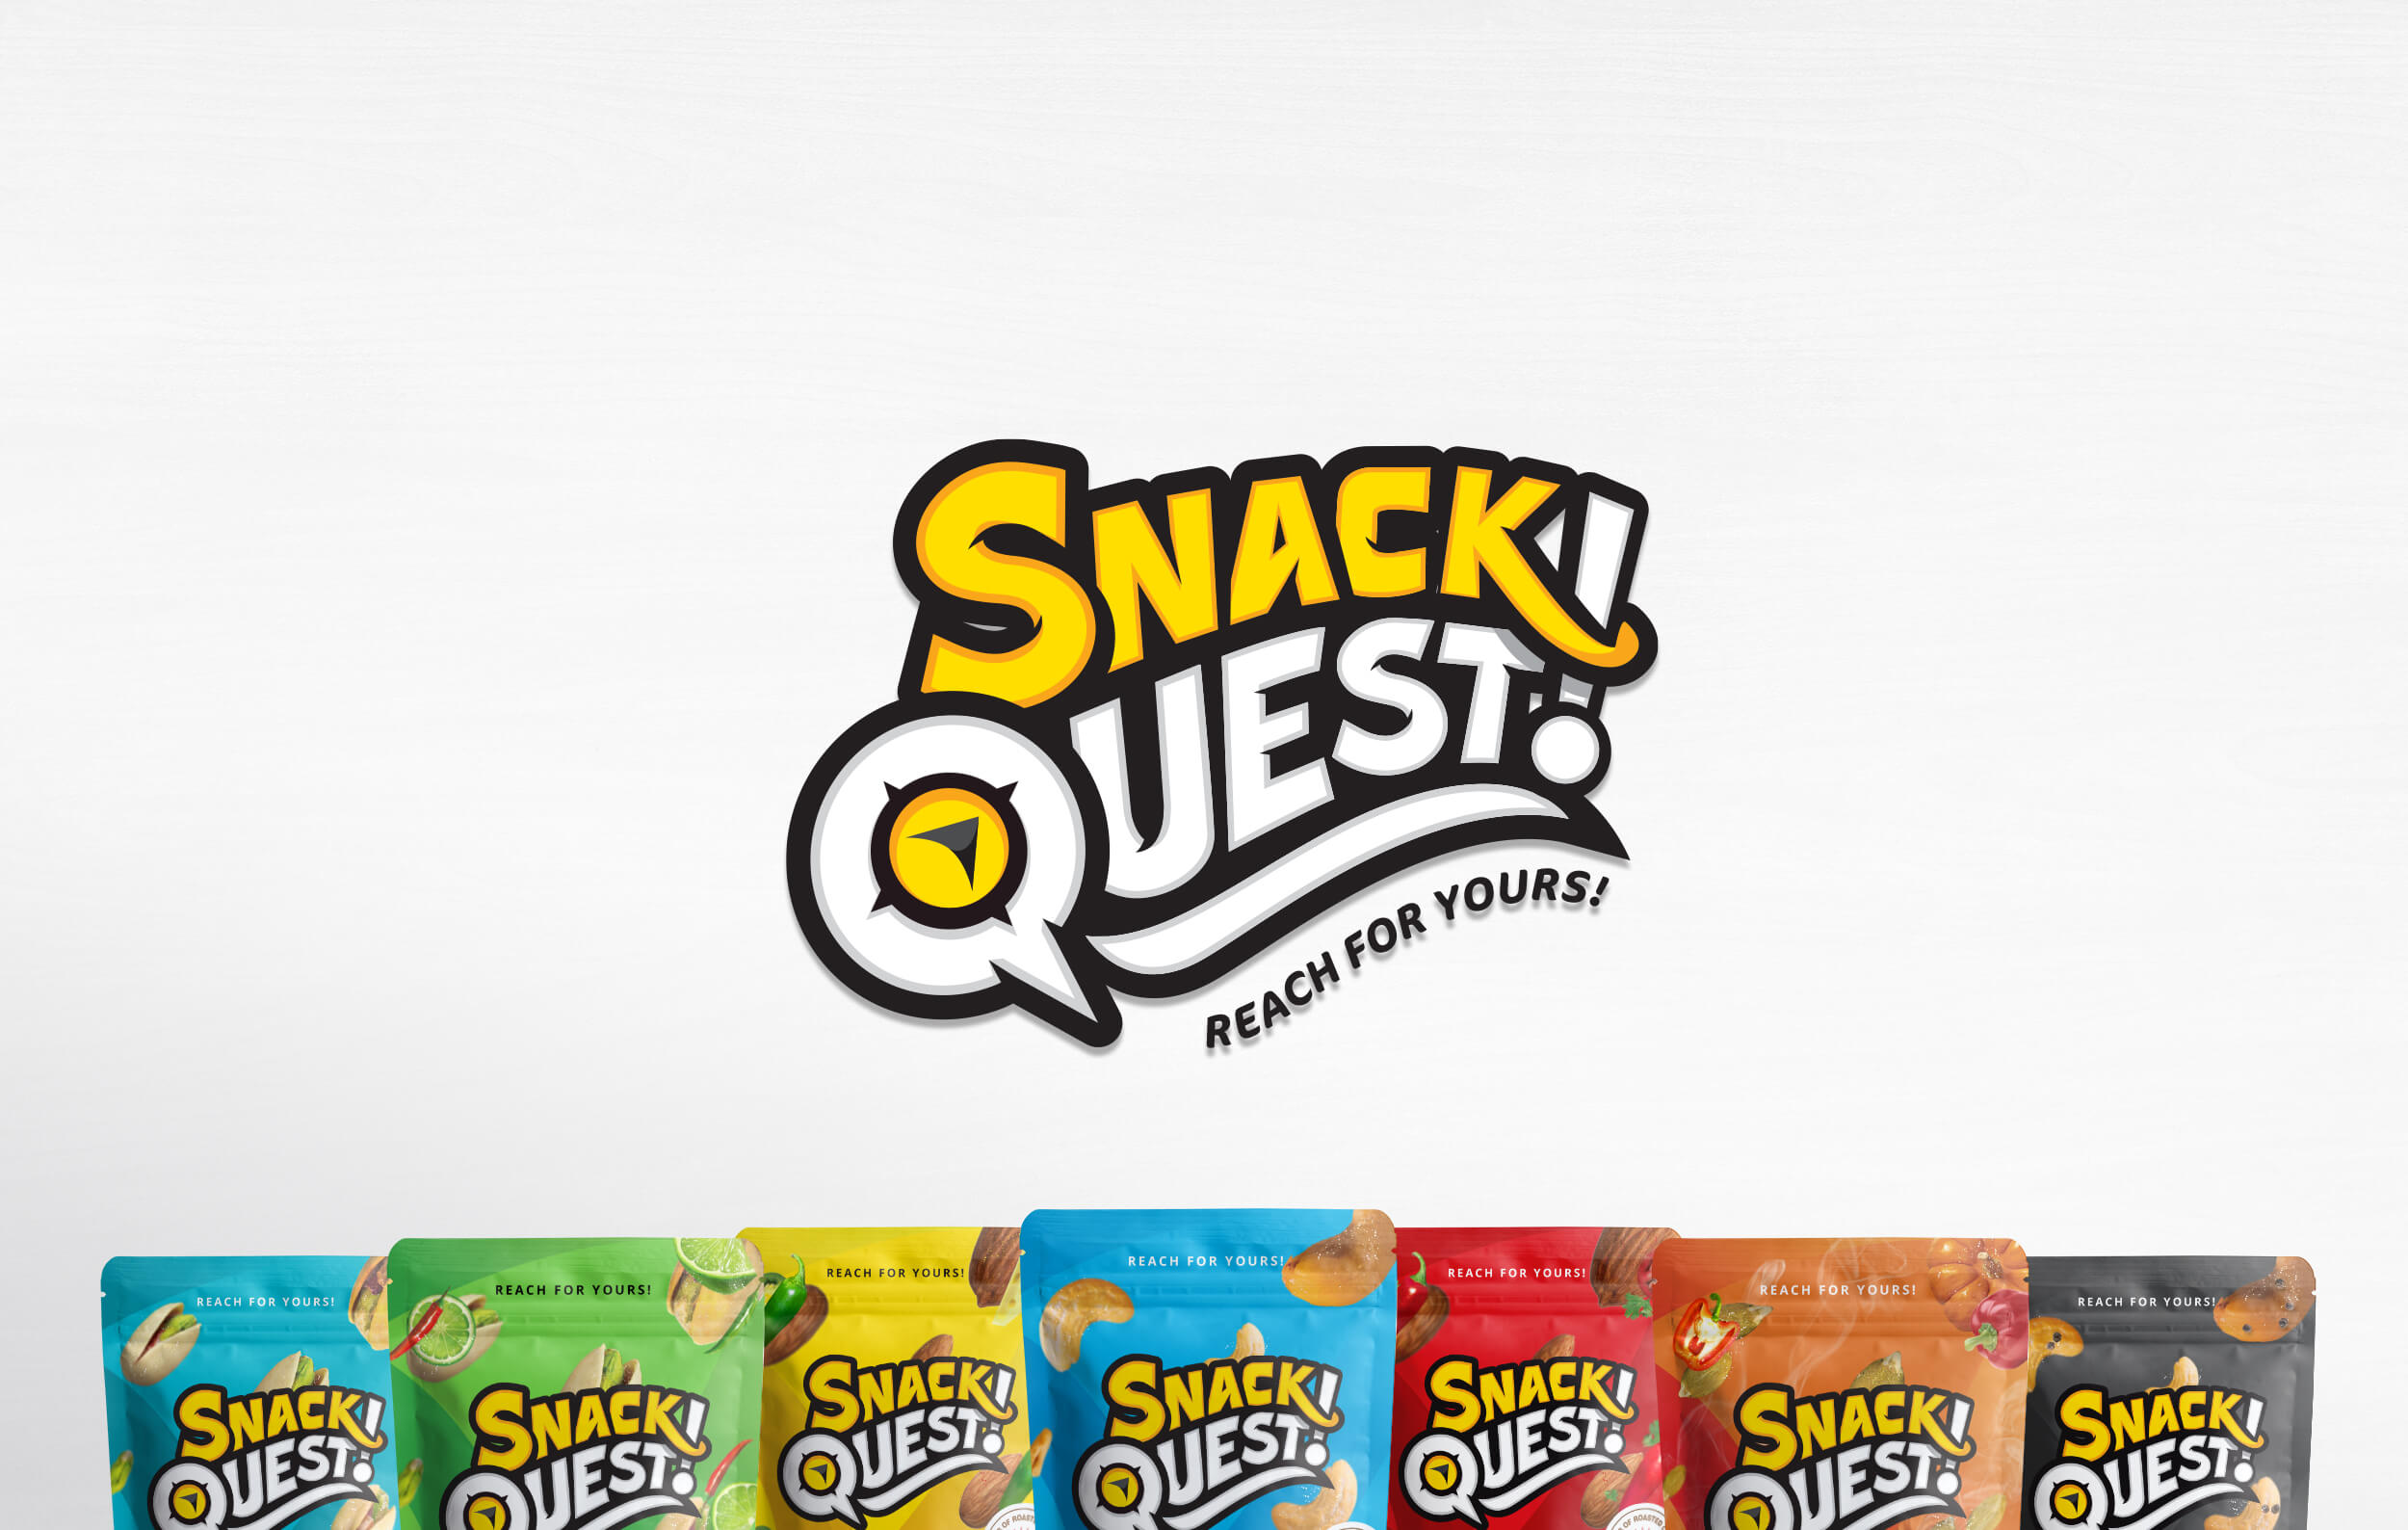 Snack-Quest-brand-identity-packaging-design-by-Artisticodopeo-Designz(7)_1.jpg Image